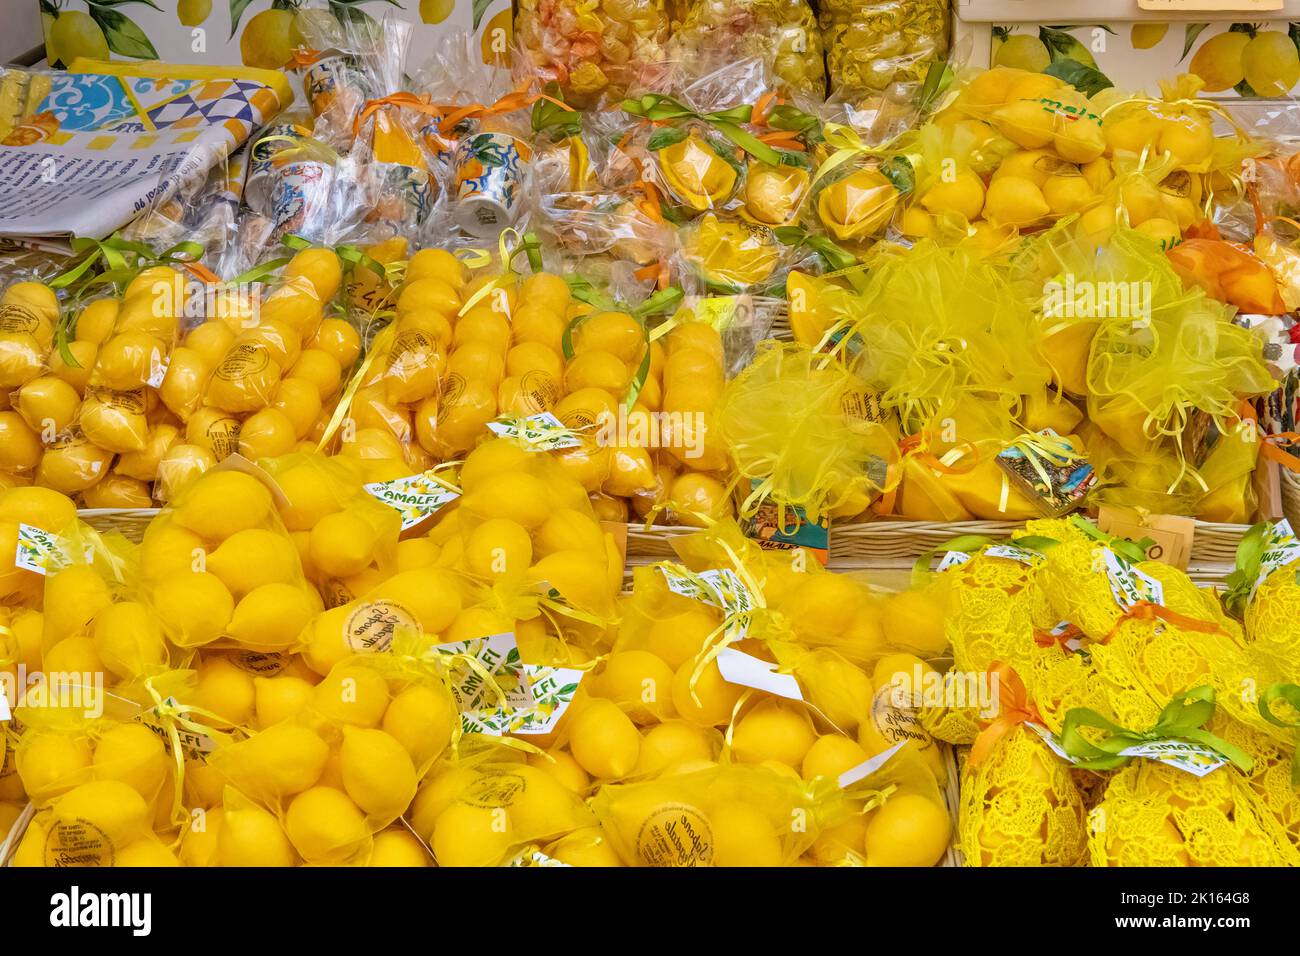 Amalfi Coast lemons - Italy - Italian yellow lemon  - Citrus limon - European lemmons - whole lemmon Stock Photo